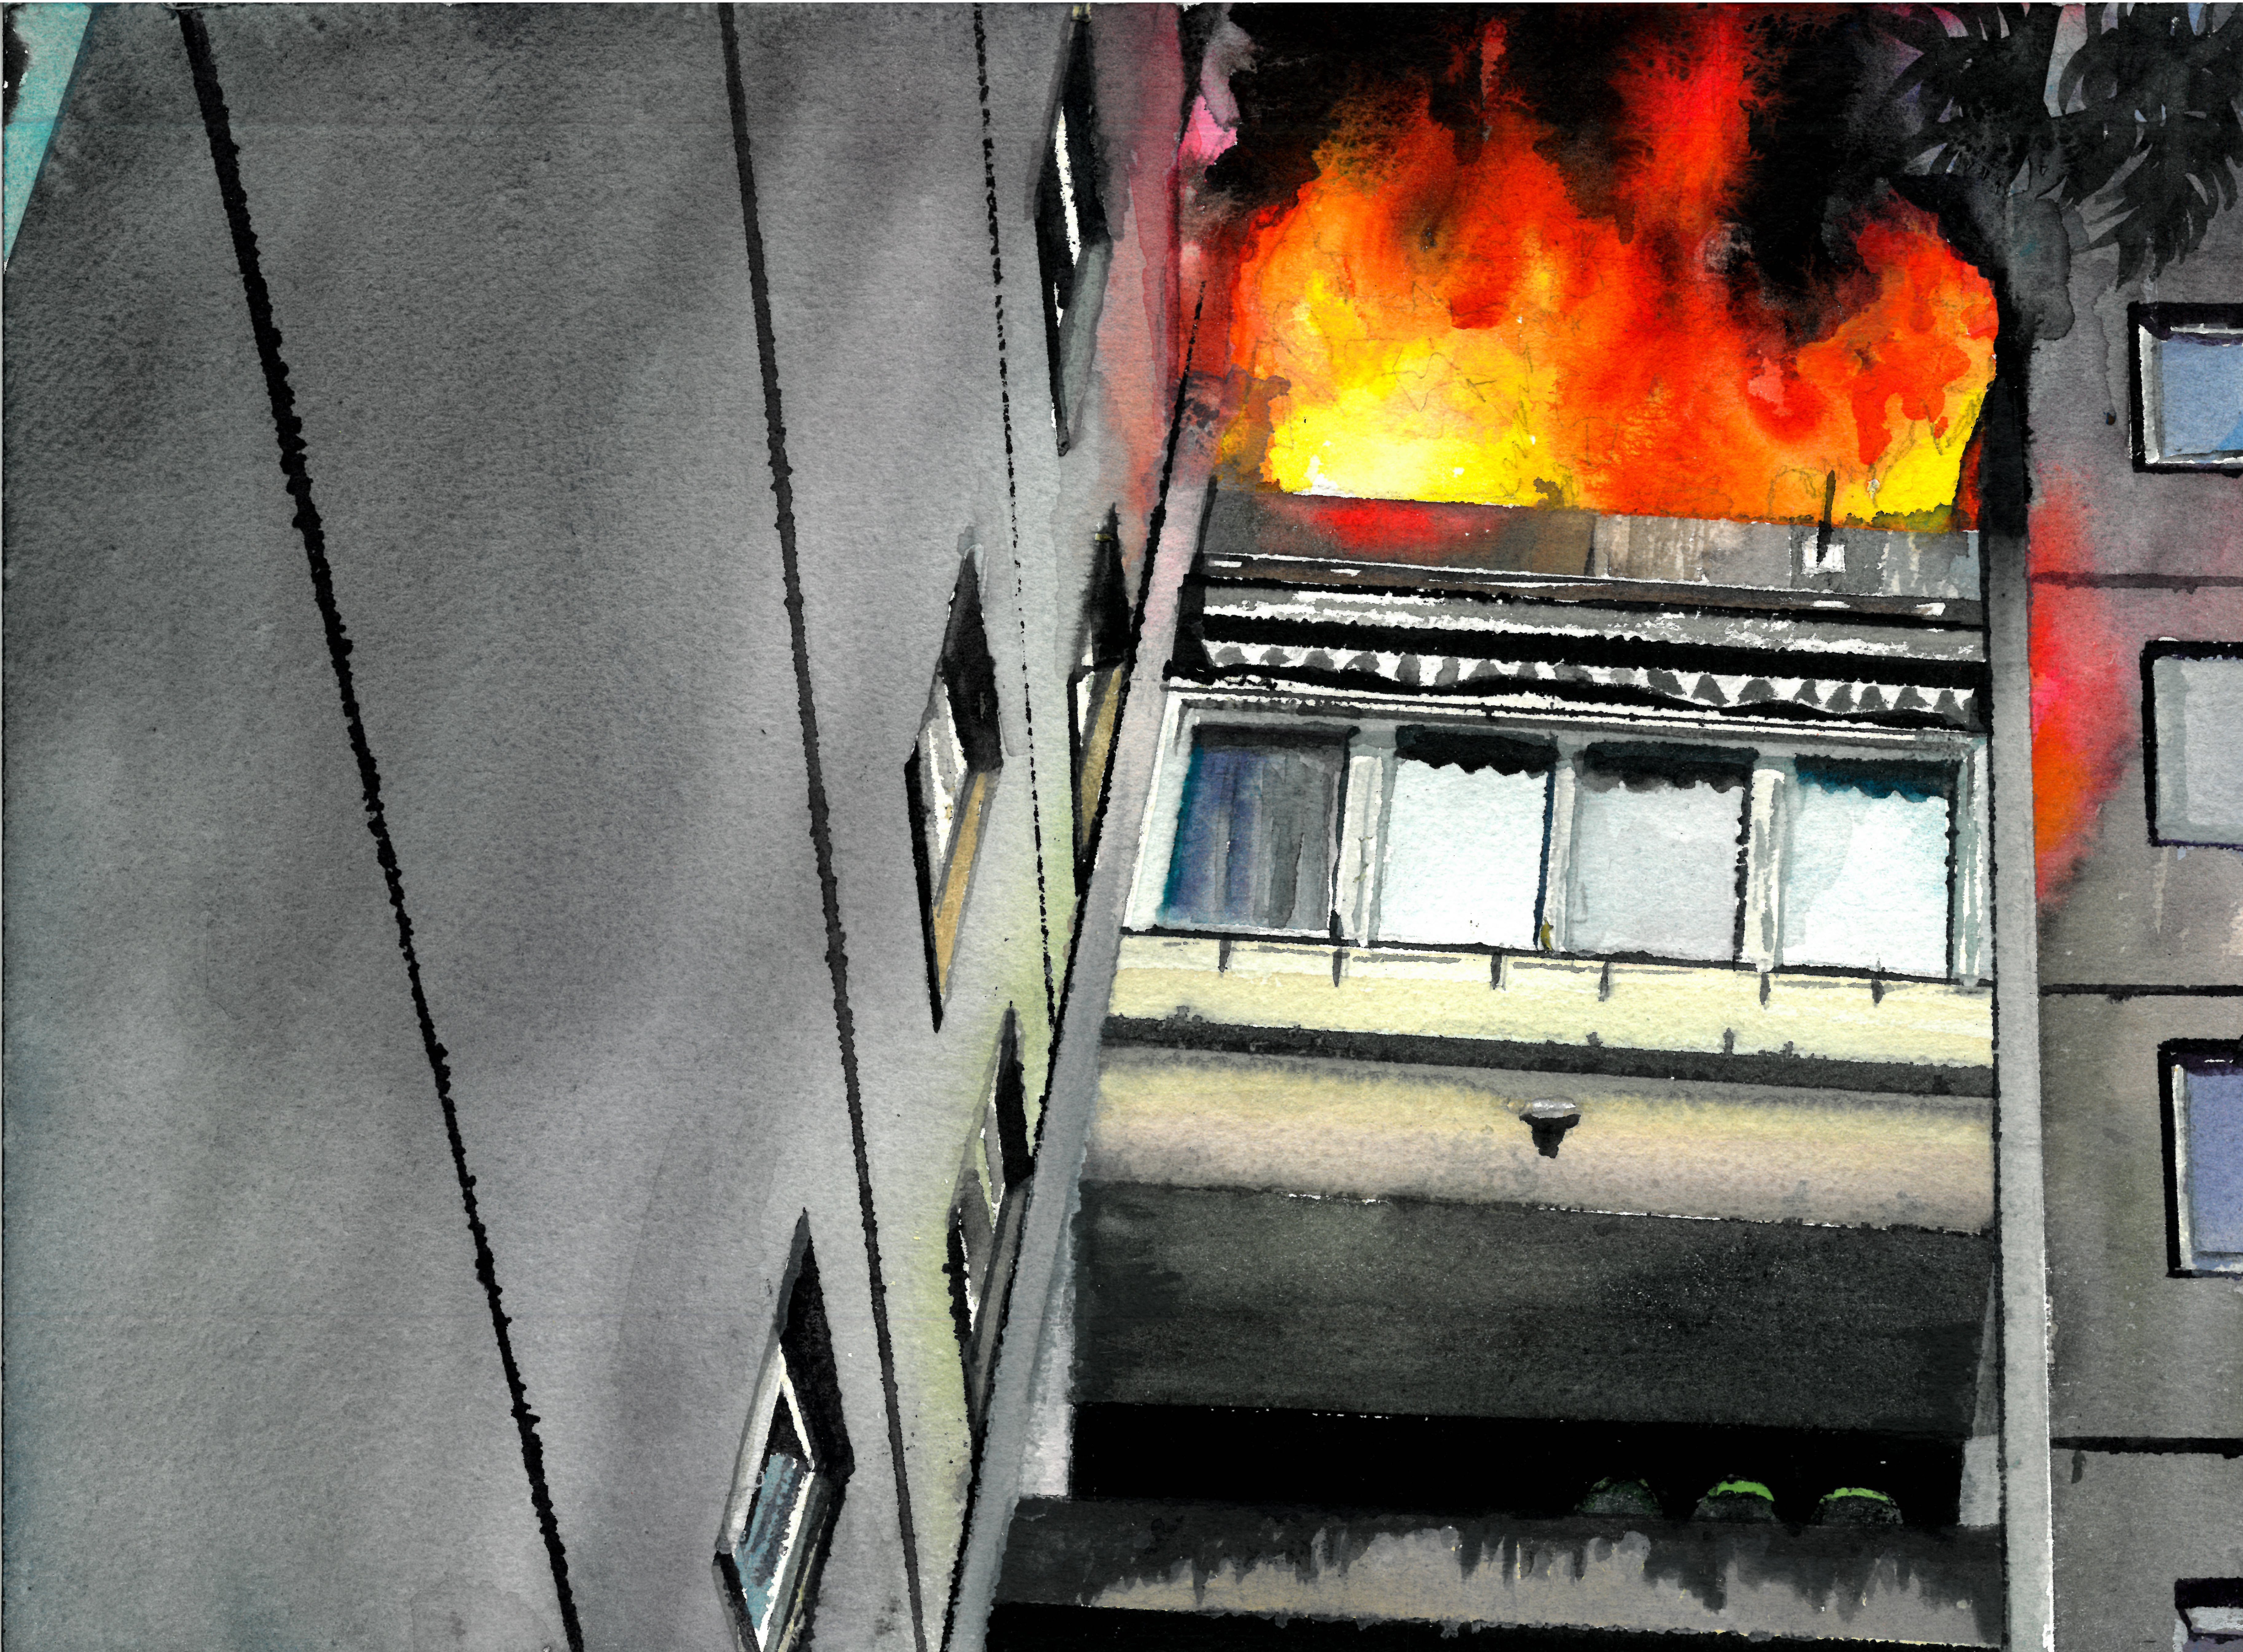 Wohnungsbrand